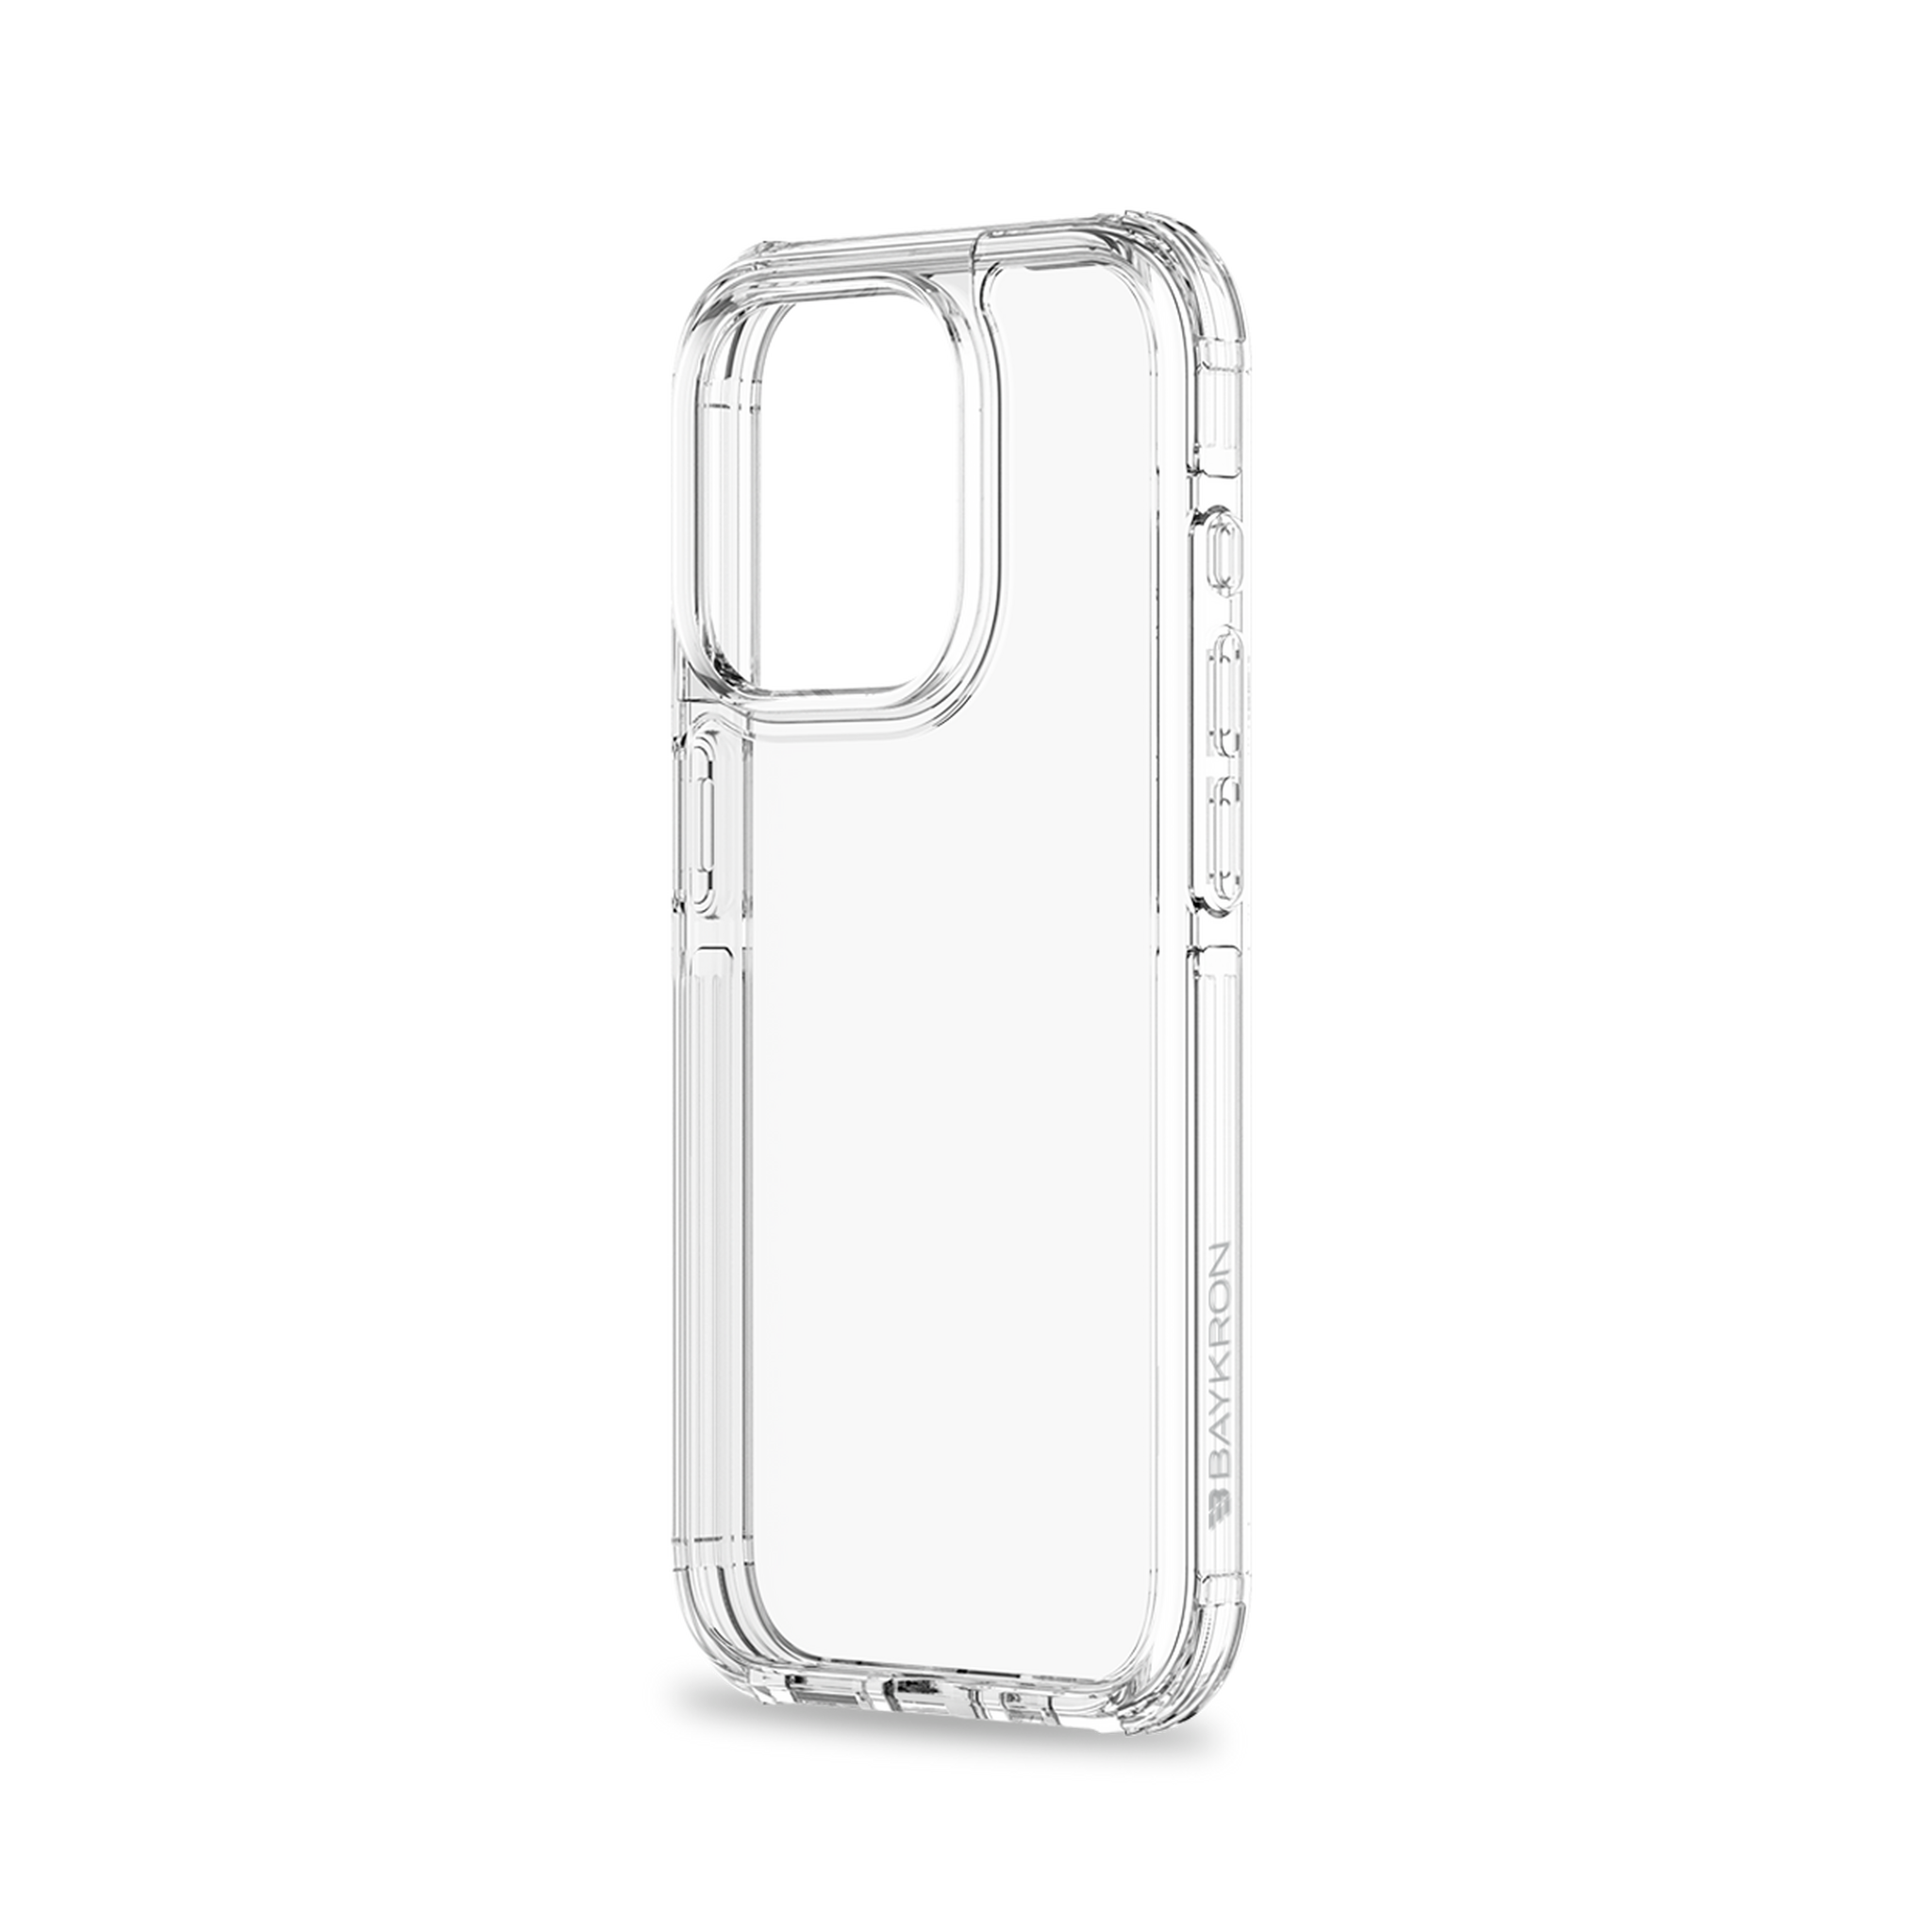 Baykron Premium iPhone 15 Pro Max 6.7-inch Case, BKR-PR-IP15PMAXHB - Clear